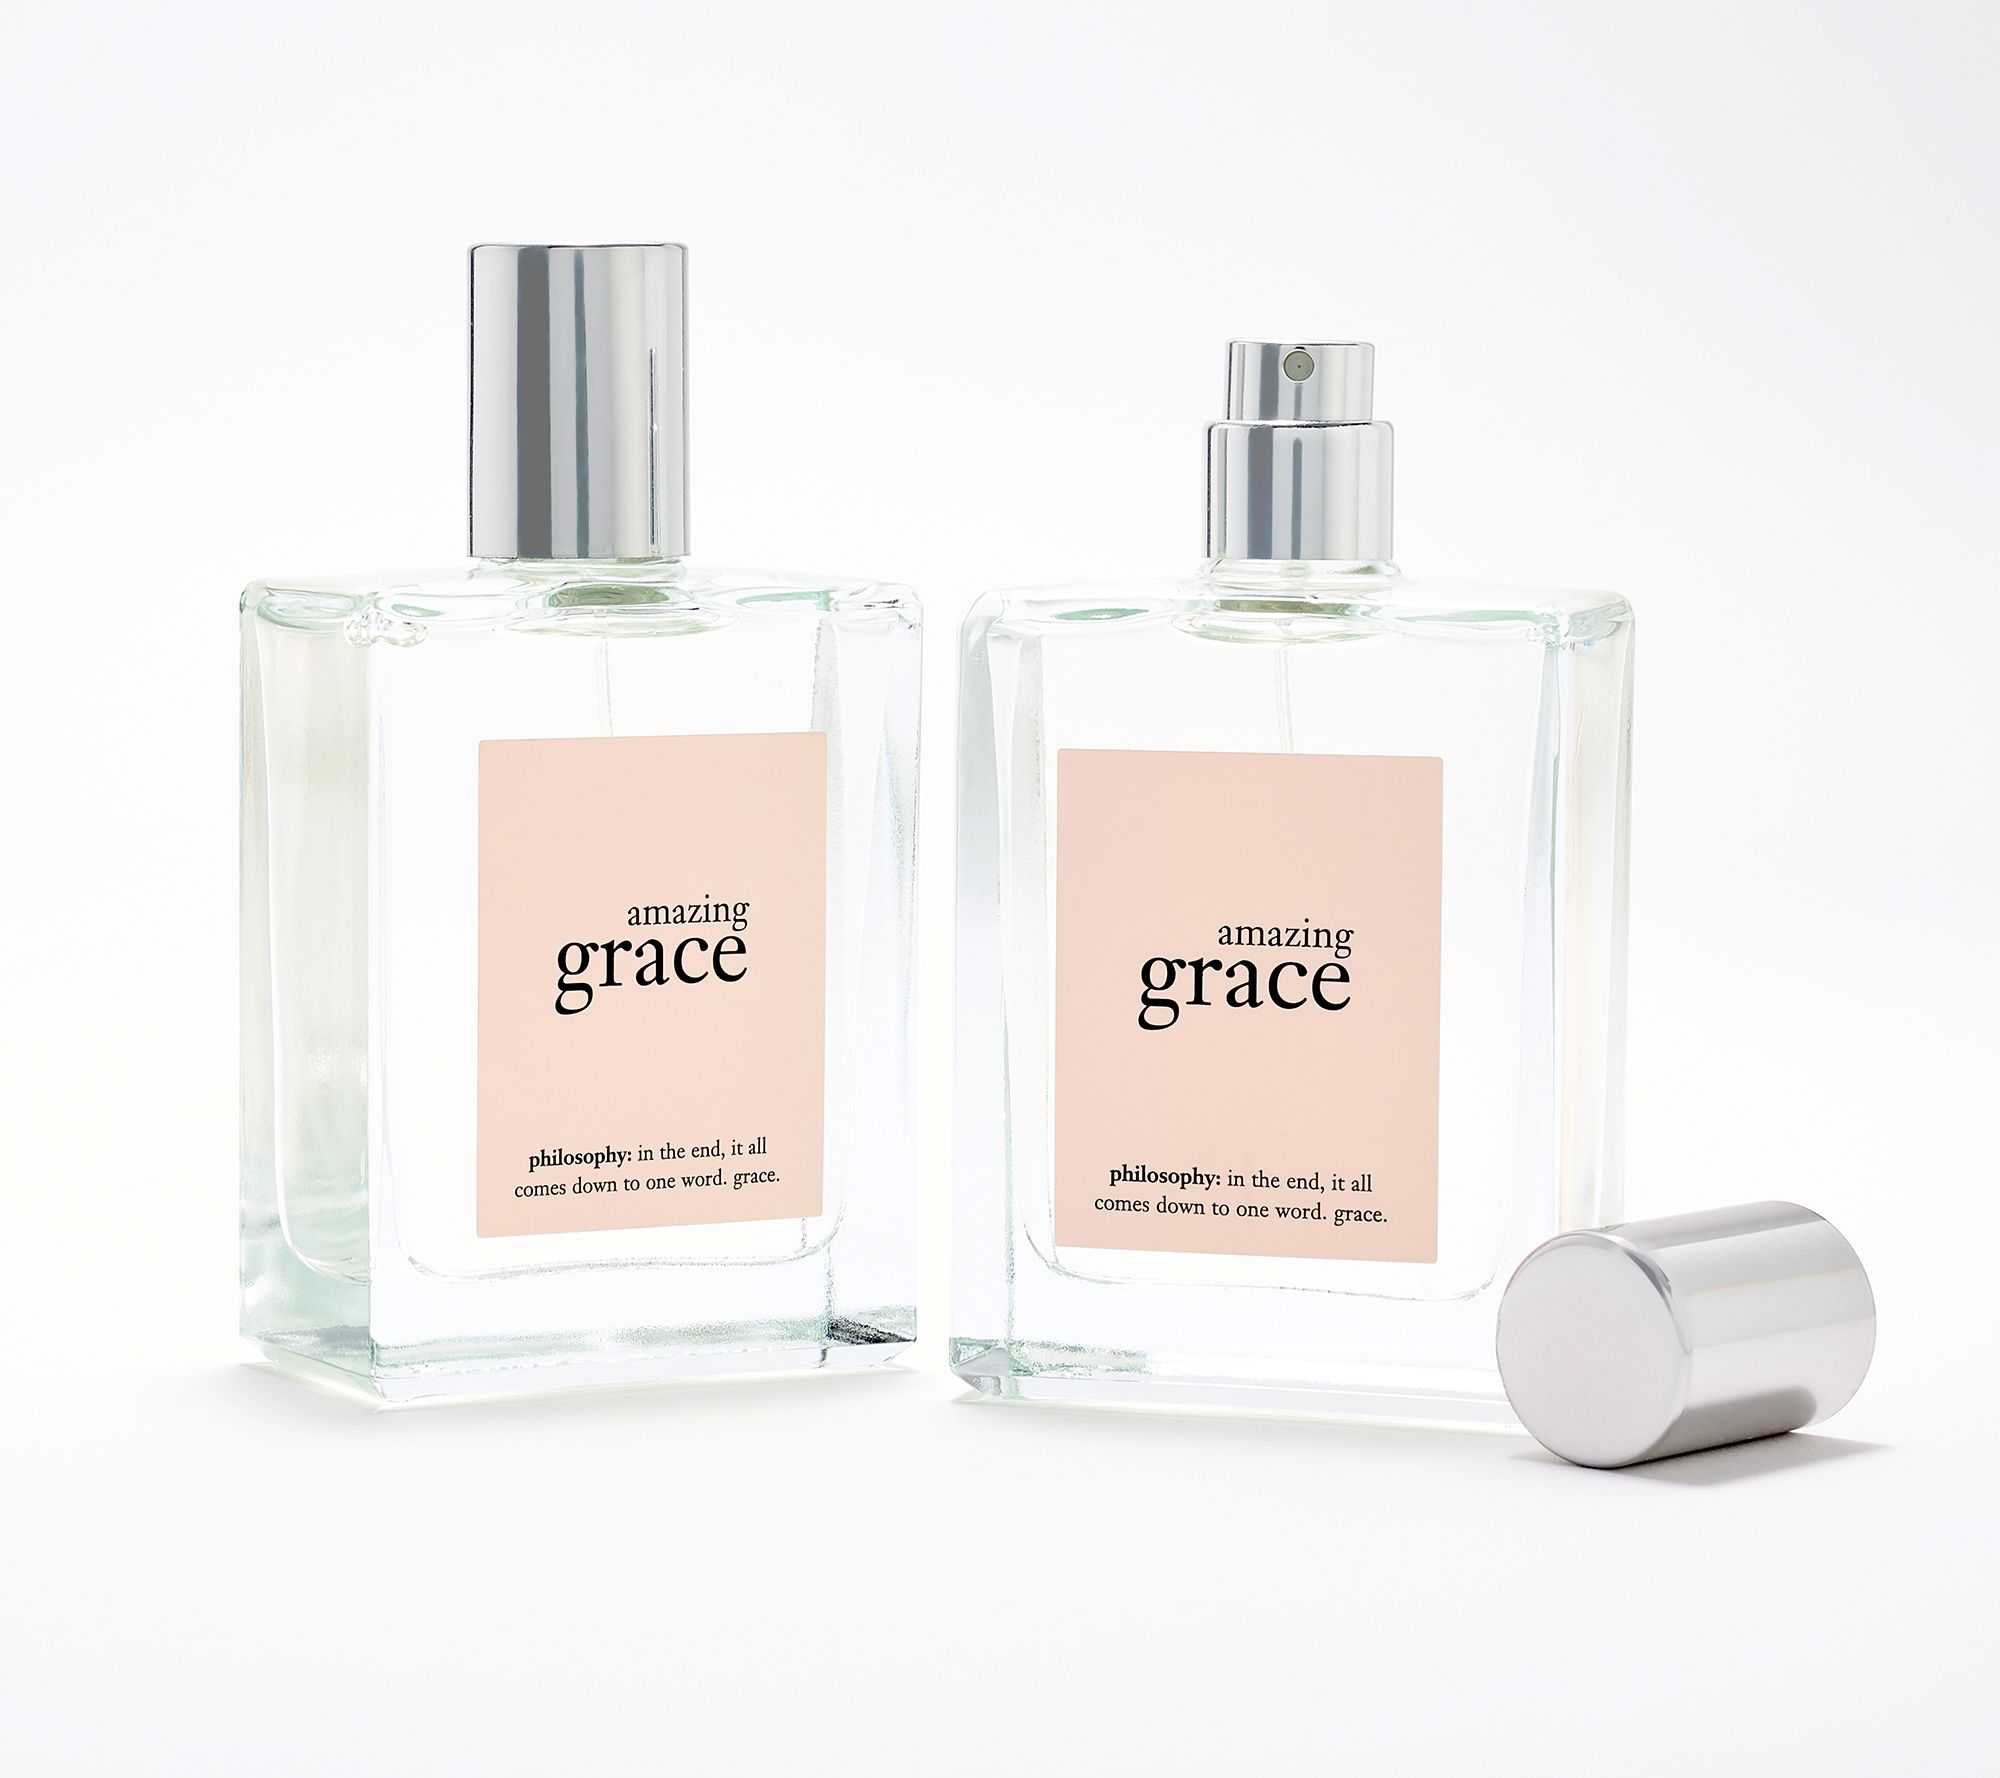 Philosophy Women's Eau De Parfum Spray - Pure Grace Nude Rose, 4 oz